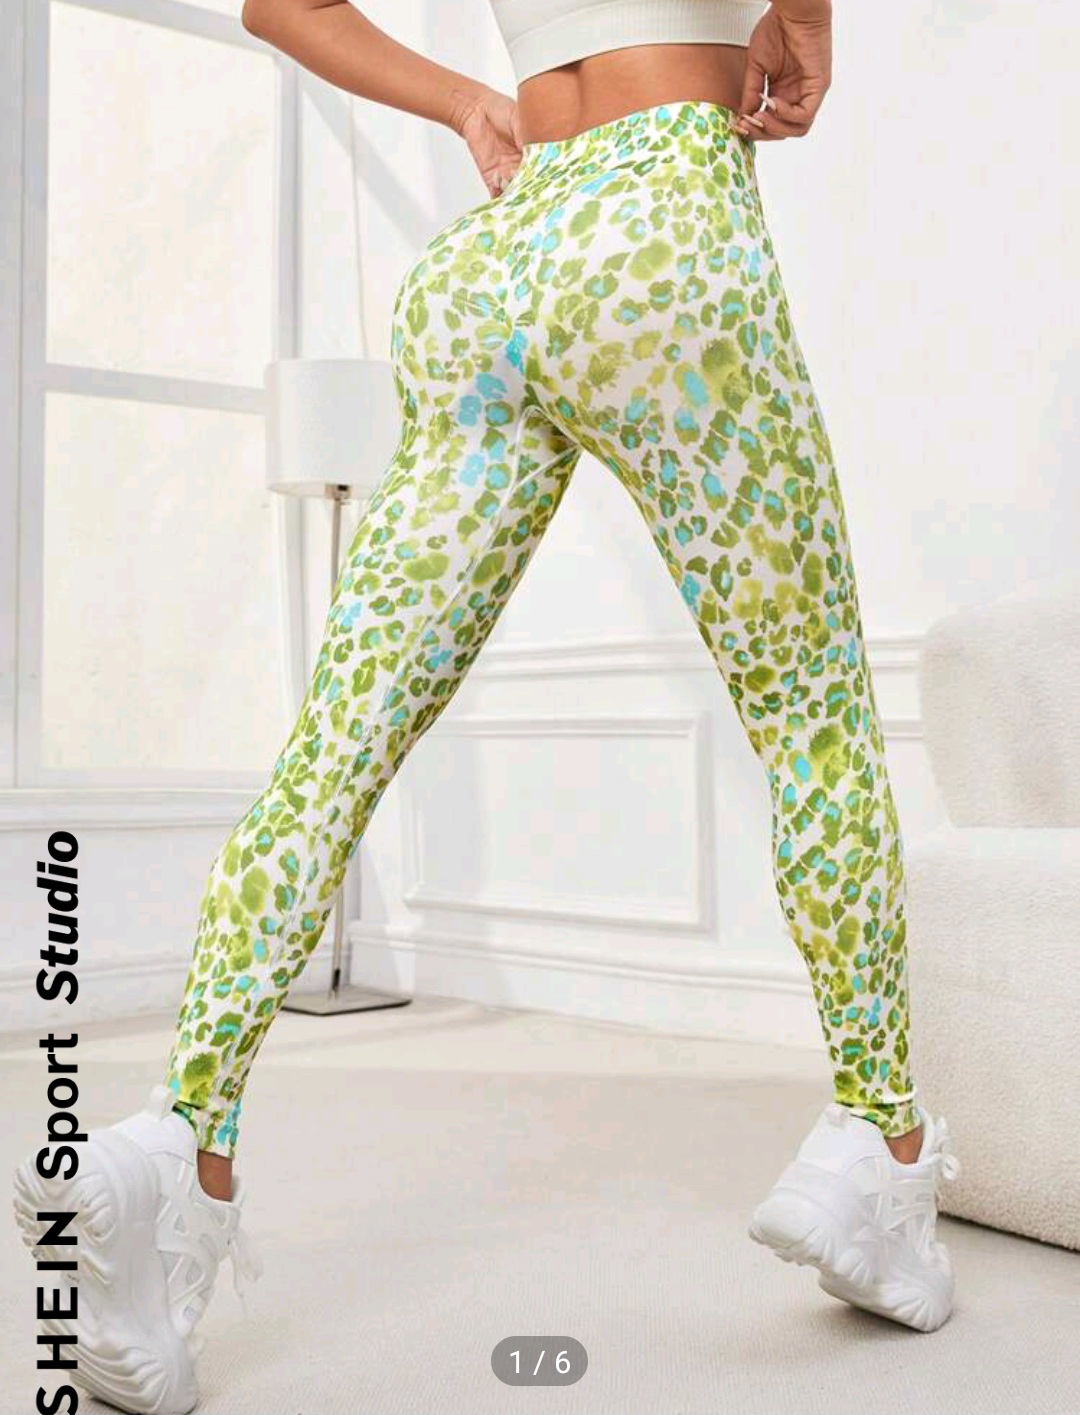 SHEIN Sport Studio Women'S Seamless Leopard Print Leggings